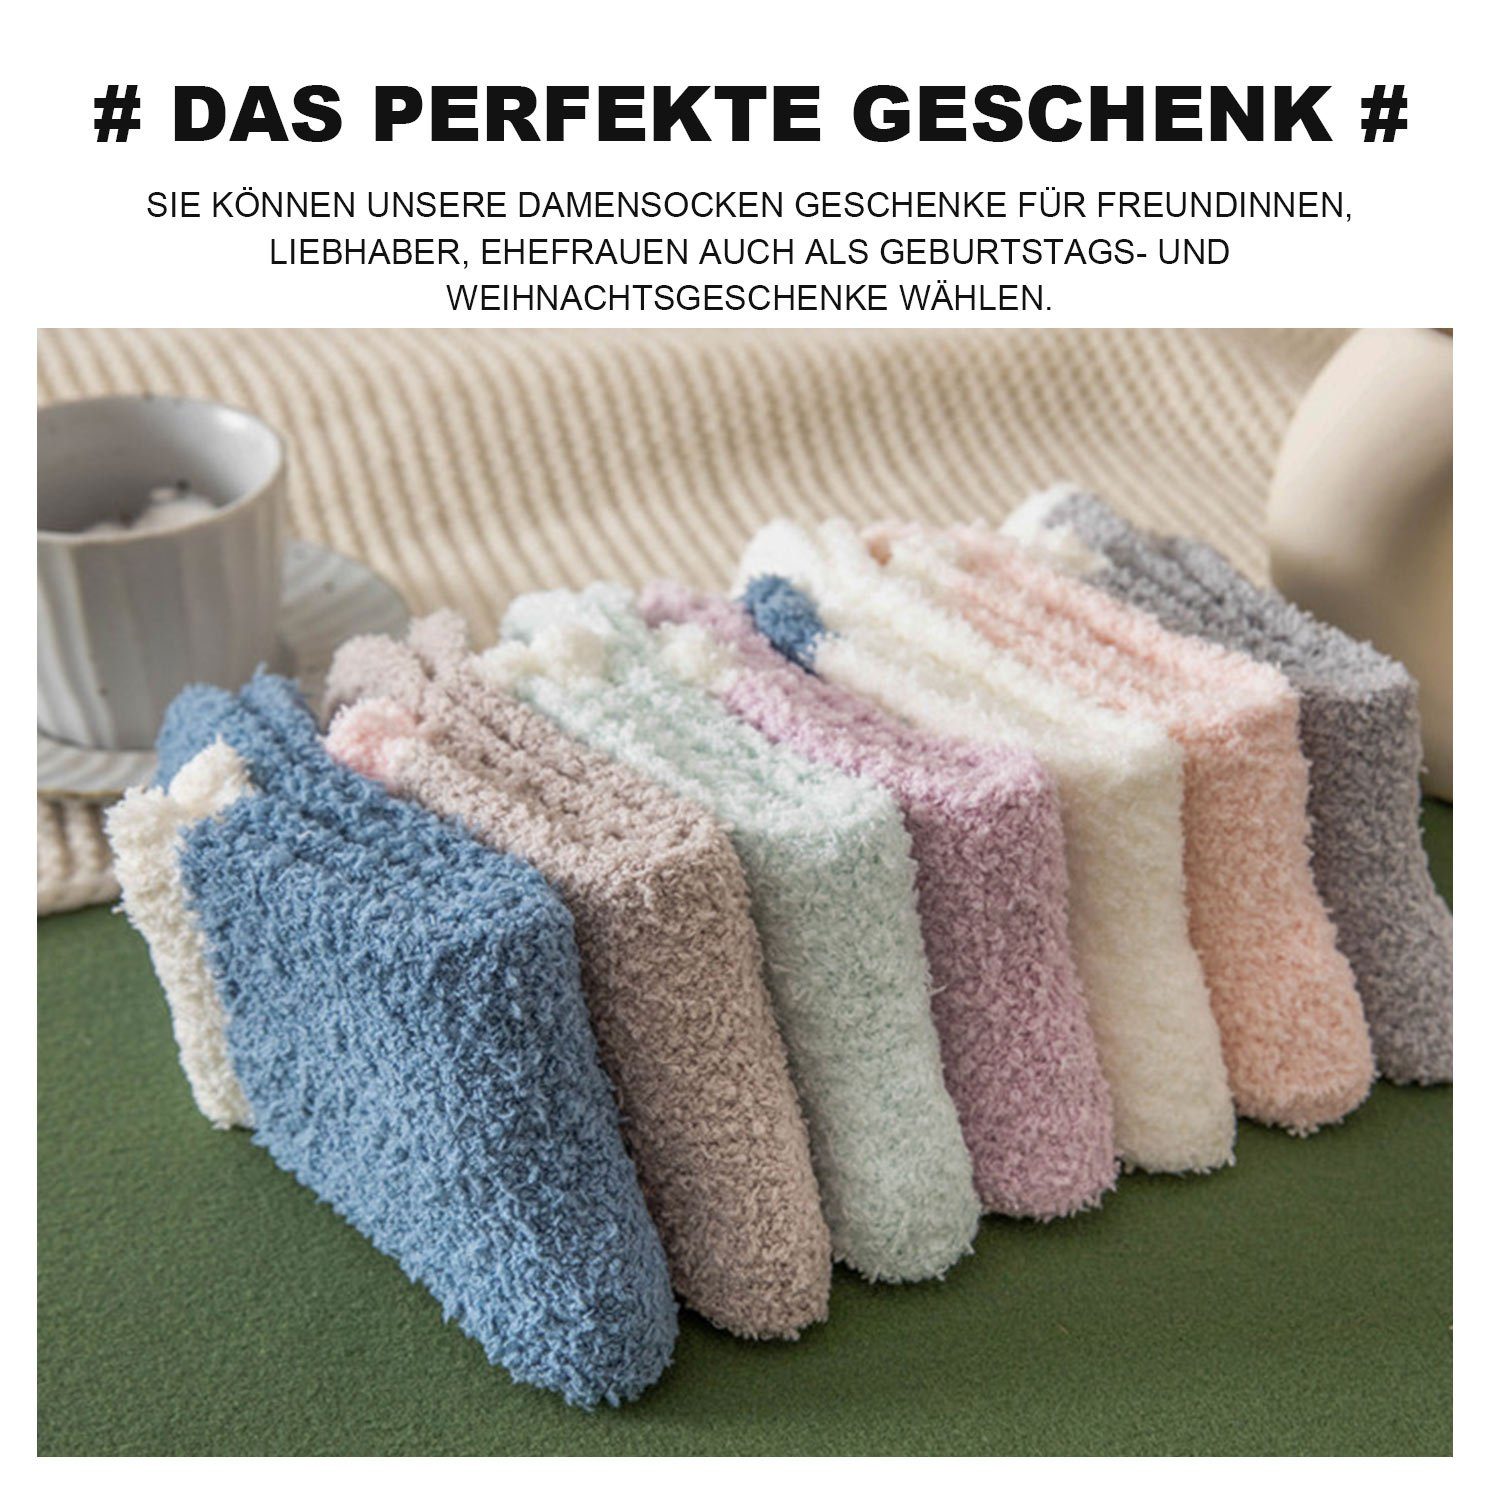 Rutschfeste für Socken Winter flauschige hellviolett warme weiche 2 Paare Socken Langsocken MAGICSHE Fleece und